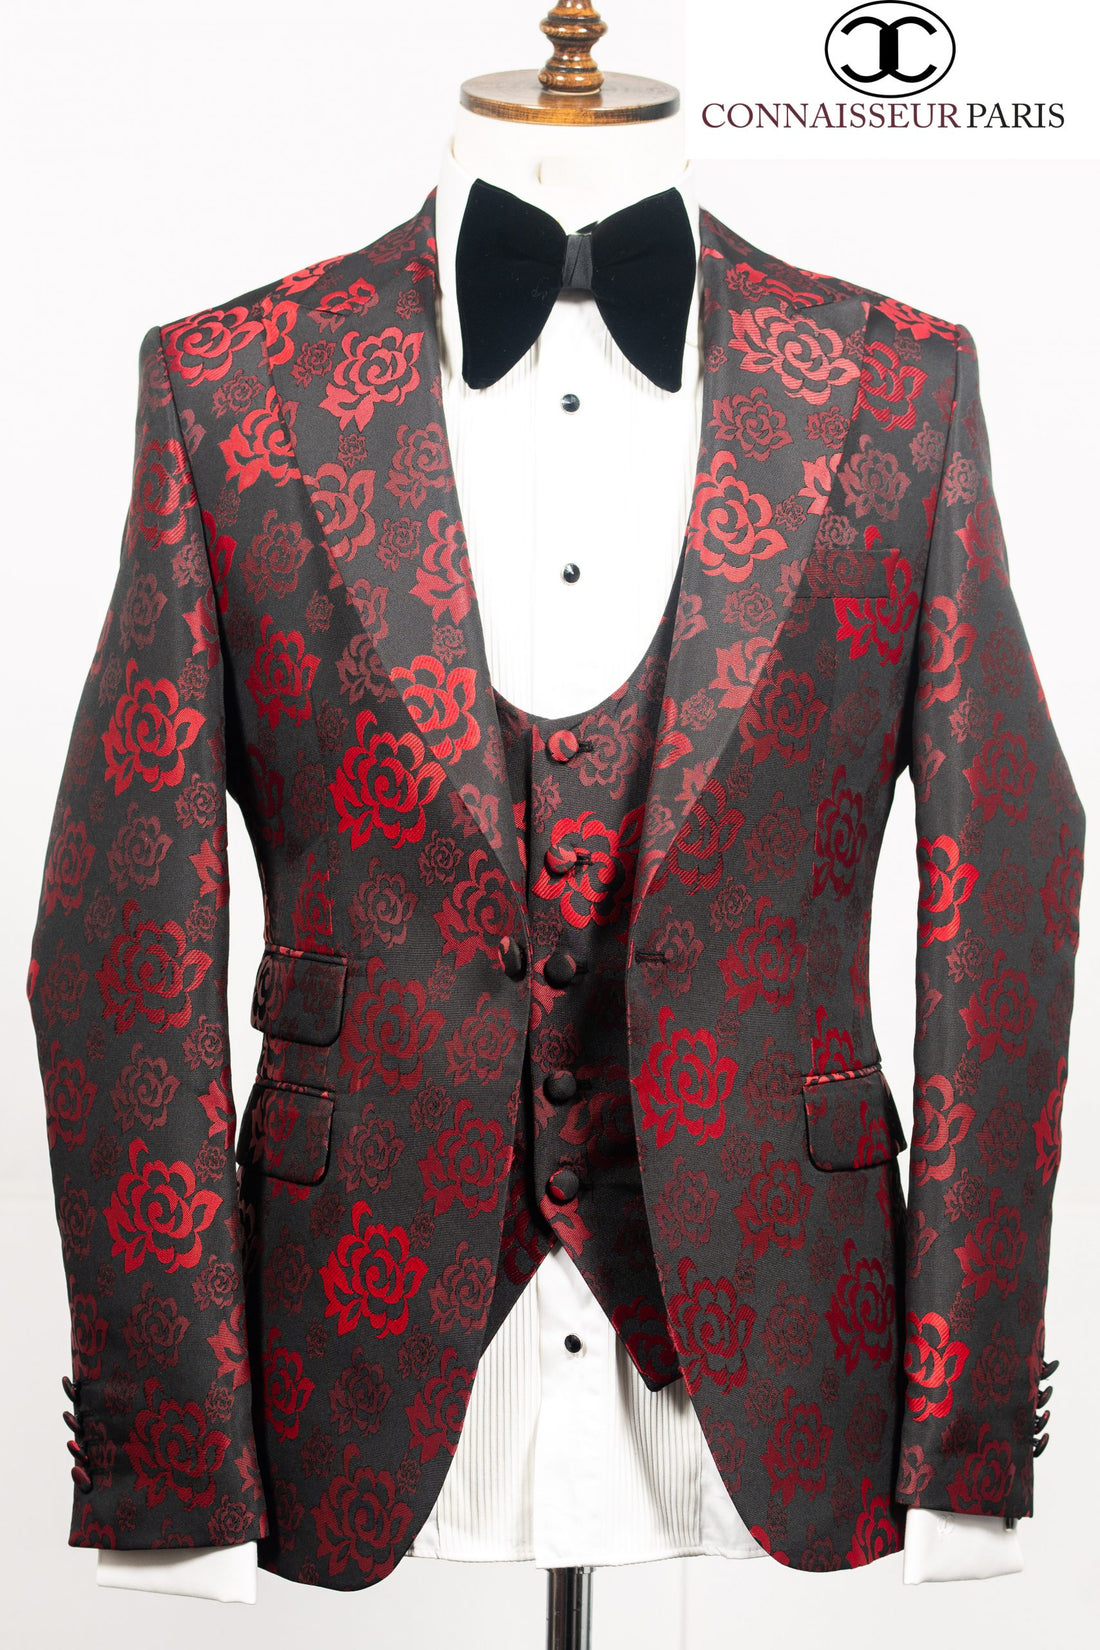 Connaisseur - Red and Black floral pattern 3-piece peaked lapel slim fit blazer with U vest